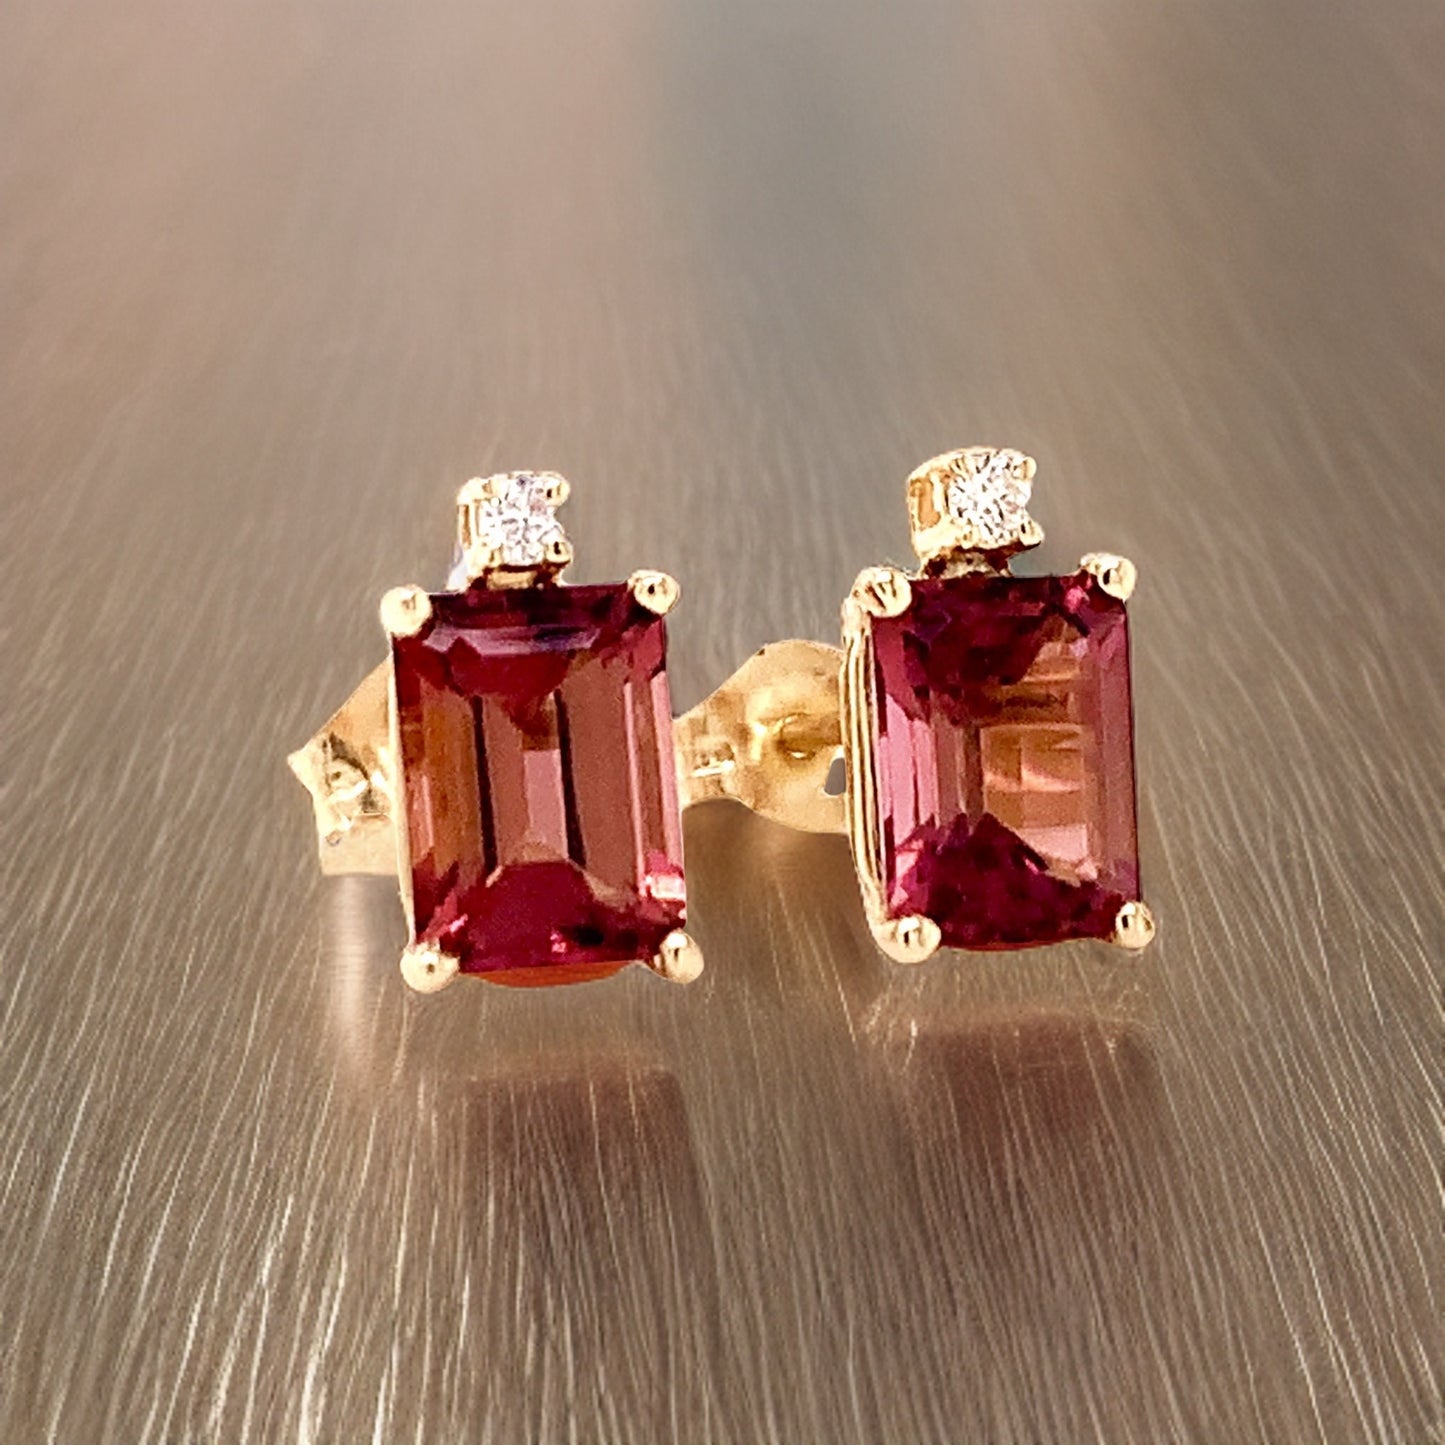 Natural Tourmaline Diamond Earrings 14k Gold 2.13 TCW Certified $1,950 018680 - Certified Fine Jewelry